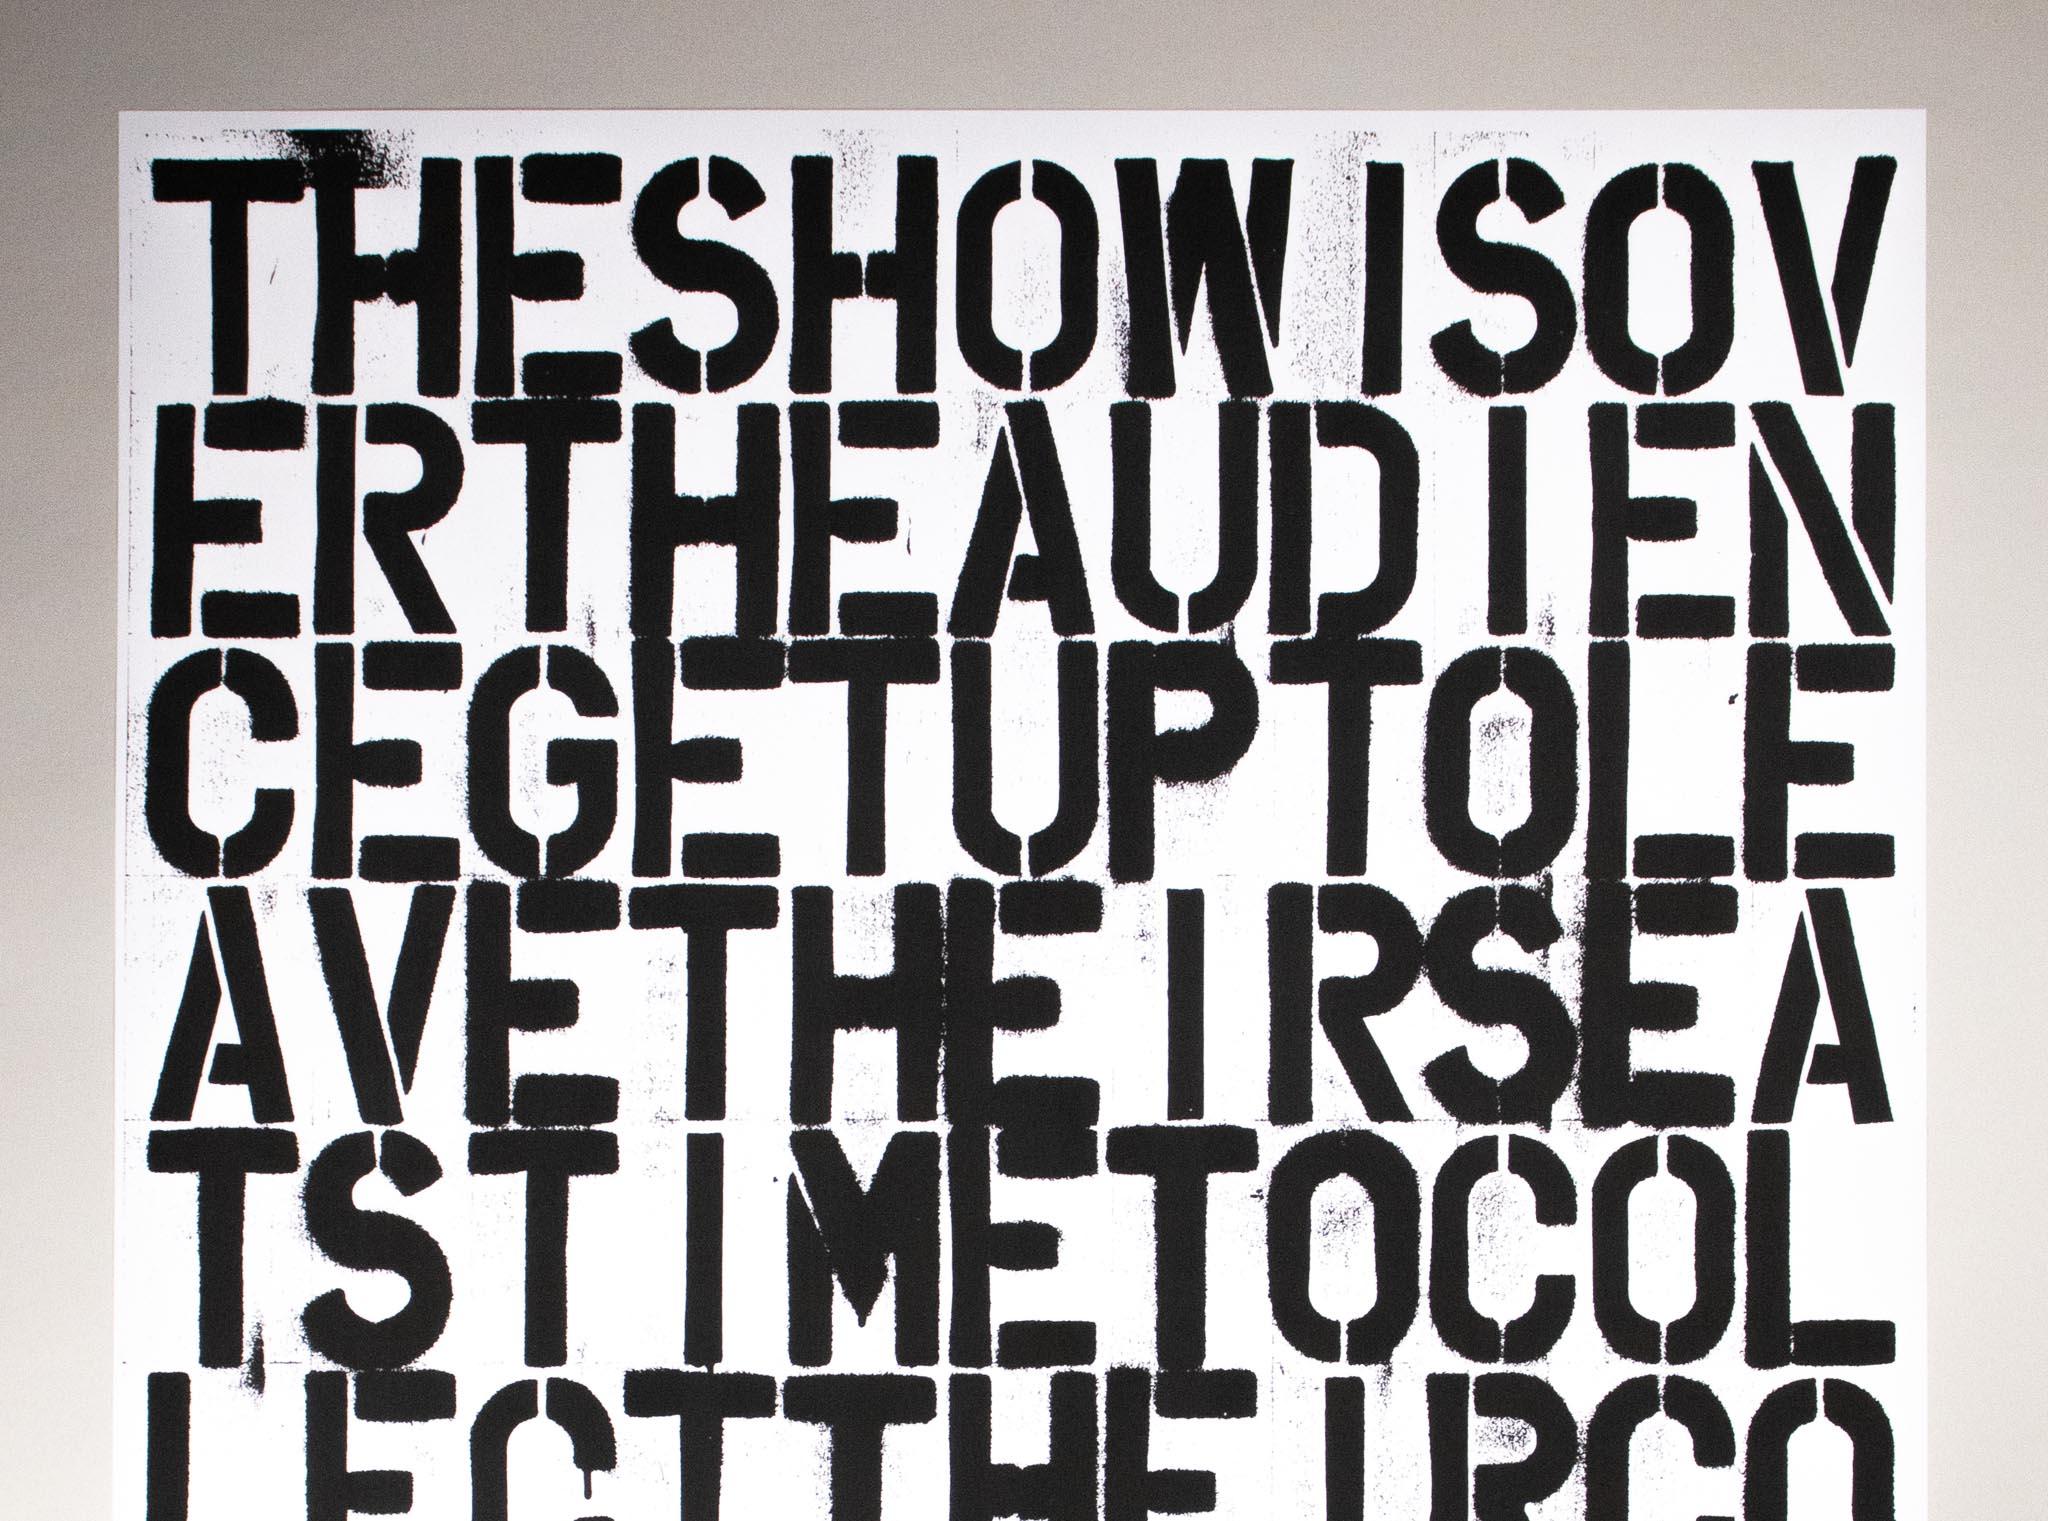 Sans titre (The Show is Over) - 2019 (1993) - Lithographie originale - Lithographie sous licence 2